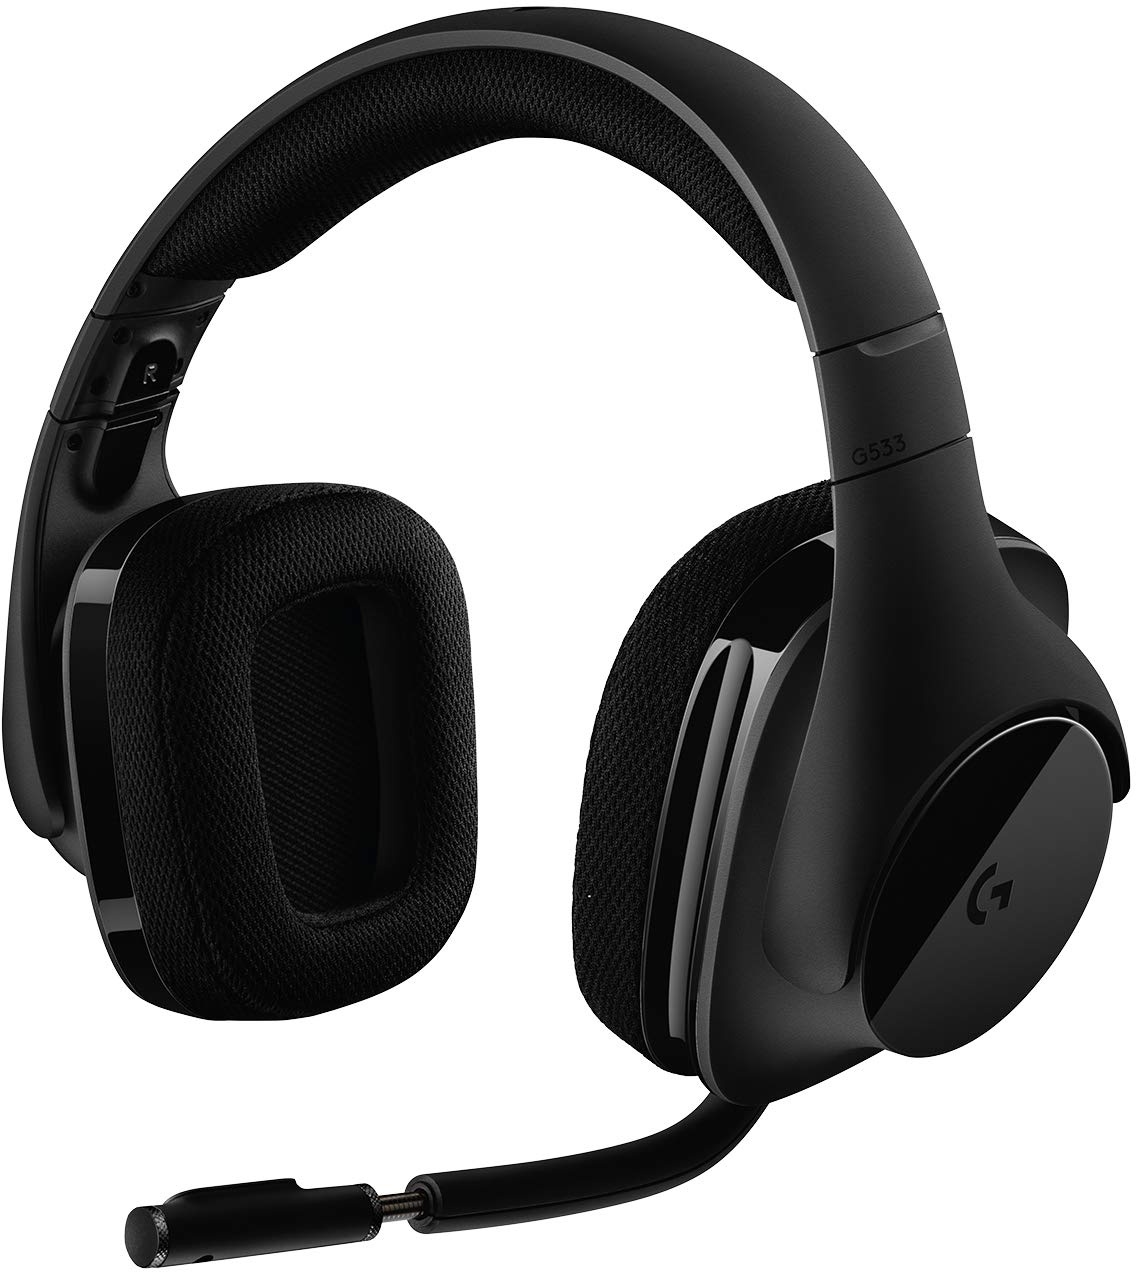 Logitech G533 kabelloses Gaming-Headset, 7.1 Surround Sound, DTS Headphone:X, 40mm Treiber, 2.4 GHz, Noise-Cancelling Mikrofon, Wireless Verbindung, 15-Stunden Akkulaufzeit, PC/Mac - Schwarz